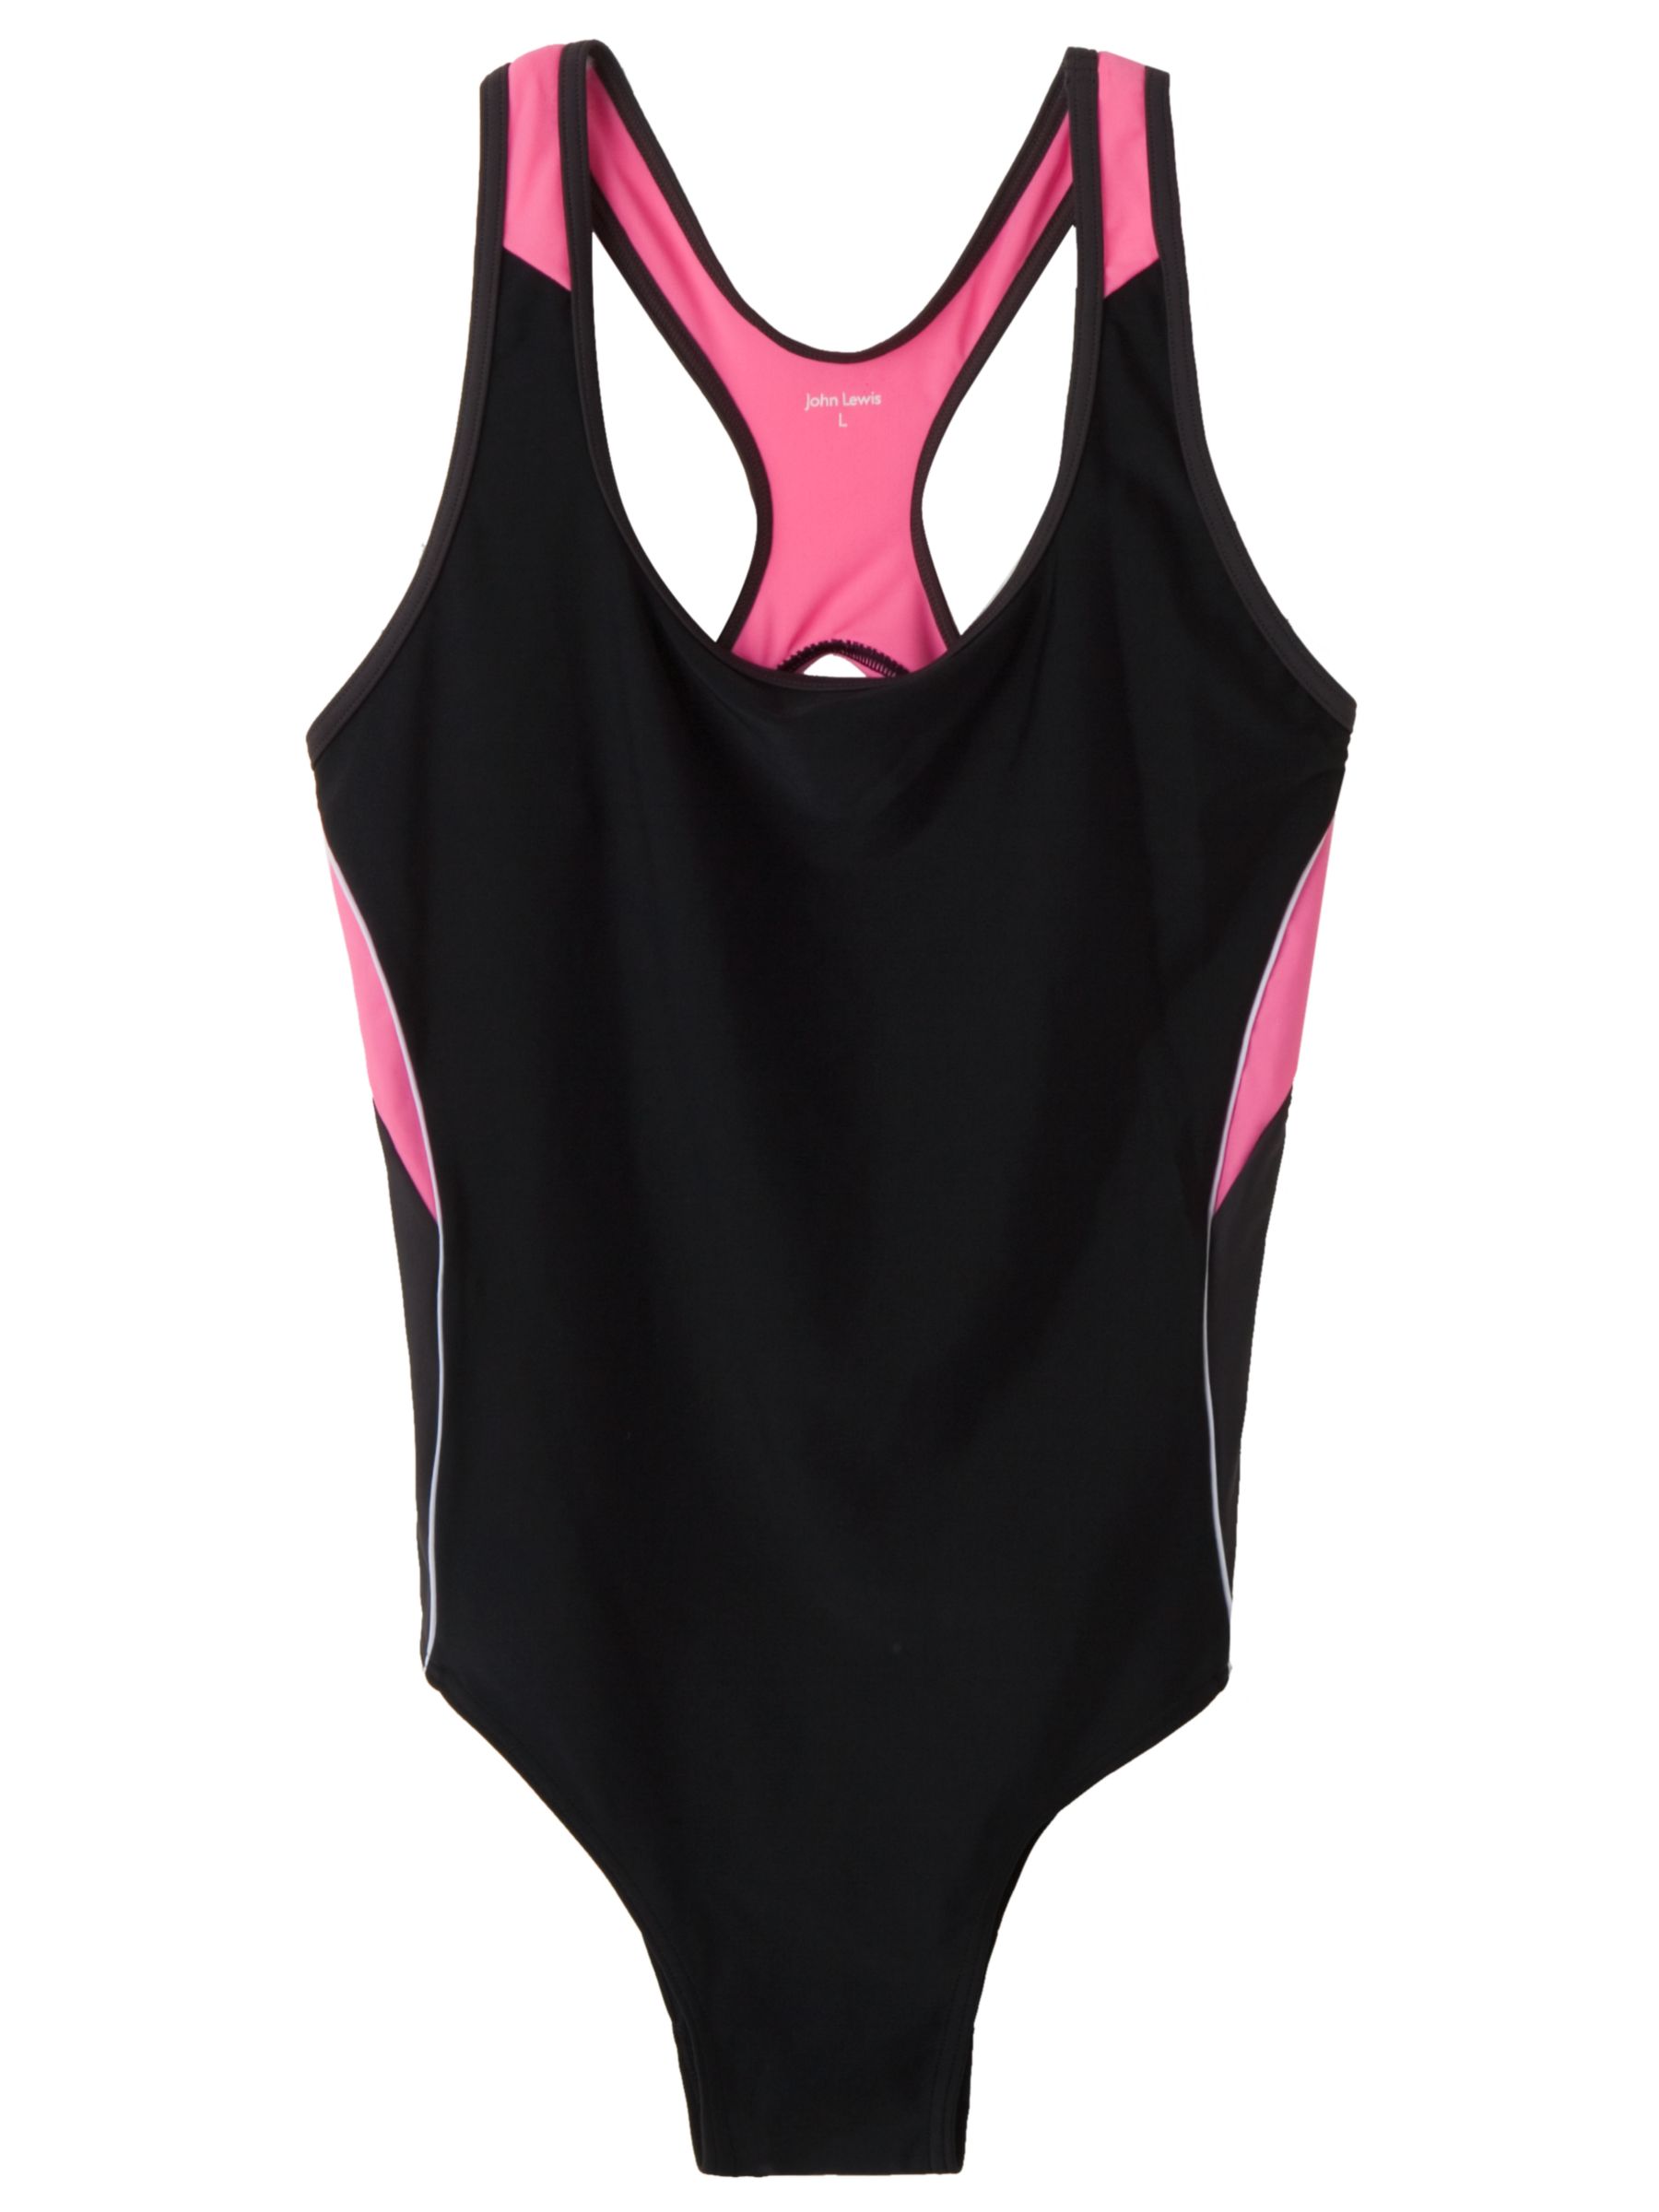 John Lewis Racer Back Swimsuit, Black/Pink, S